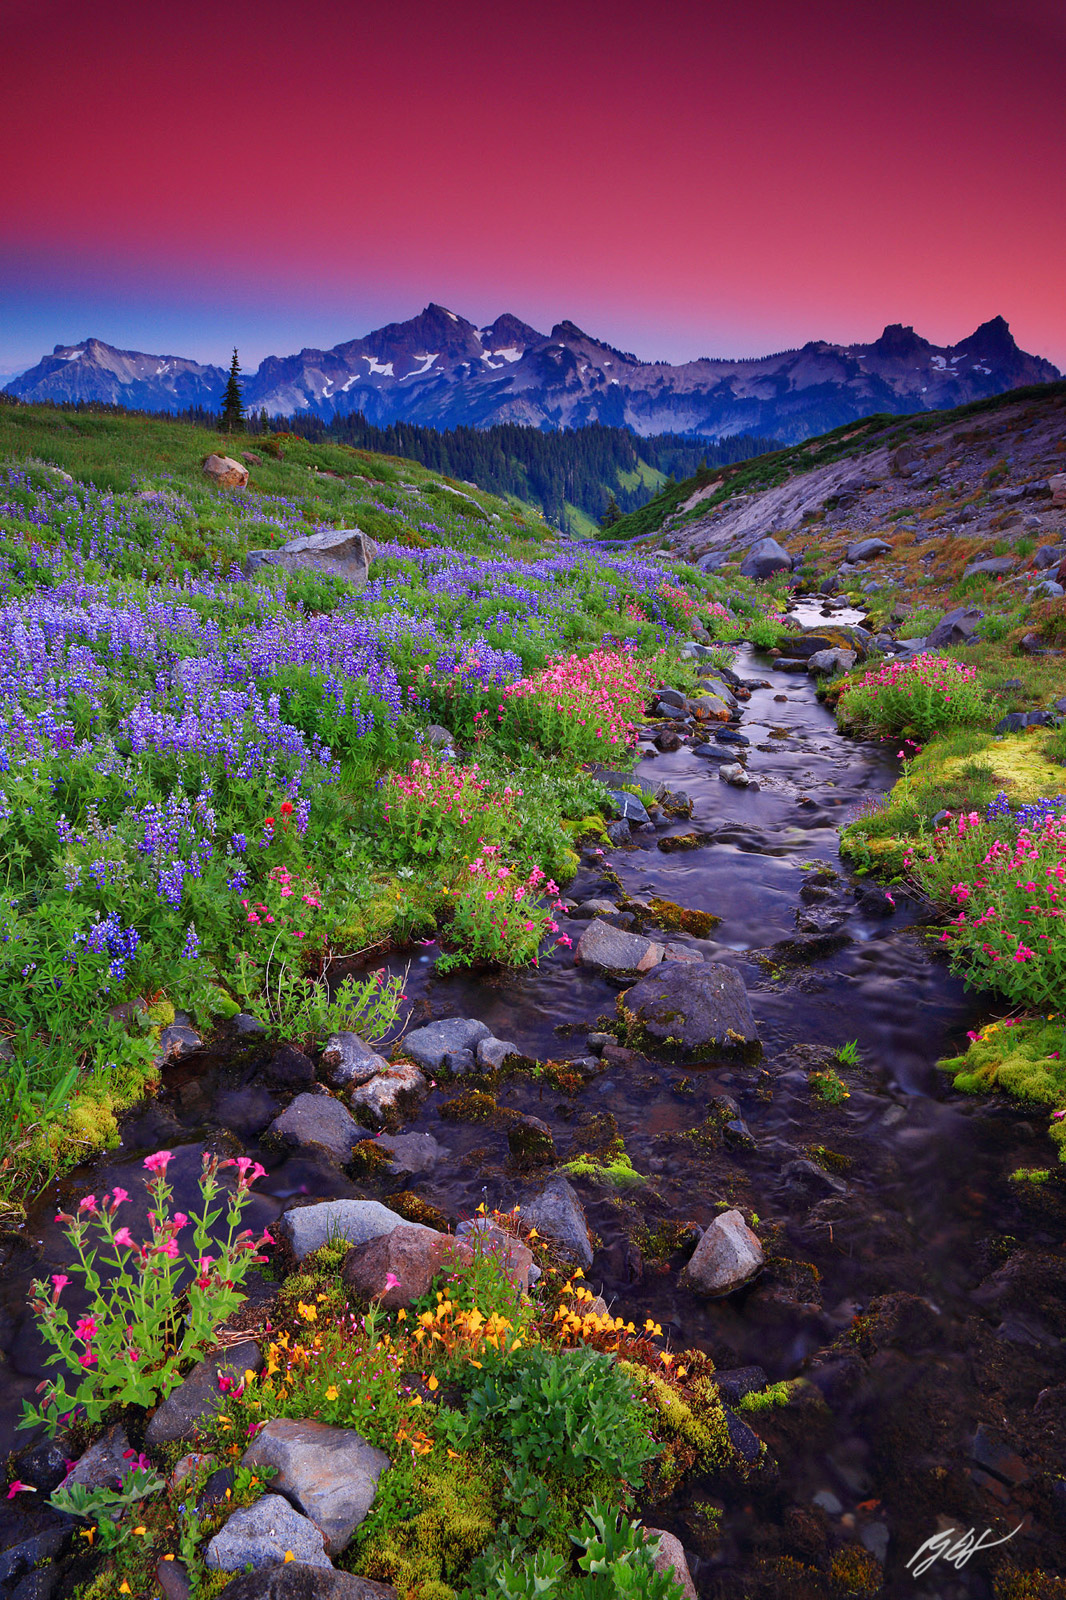 Sunset Alpenglow Wildflowers and the Tatoosh Range in Mt Rainier National Park in Washington